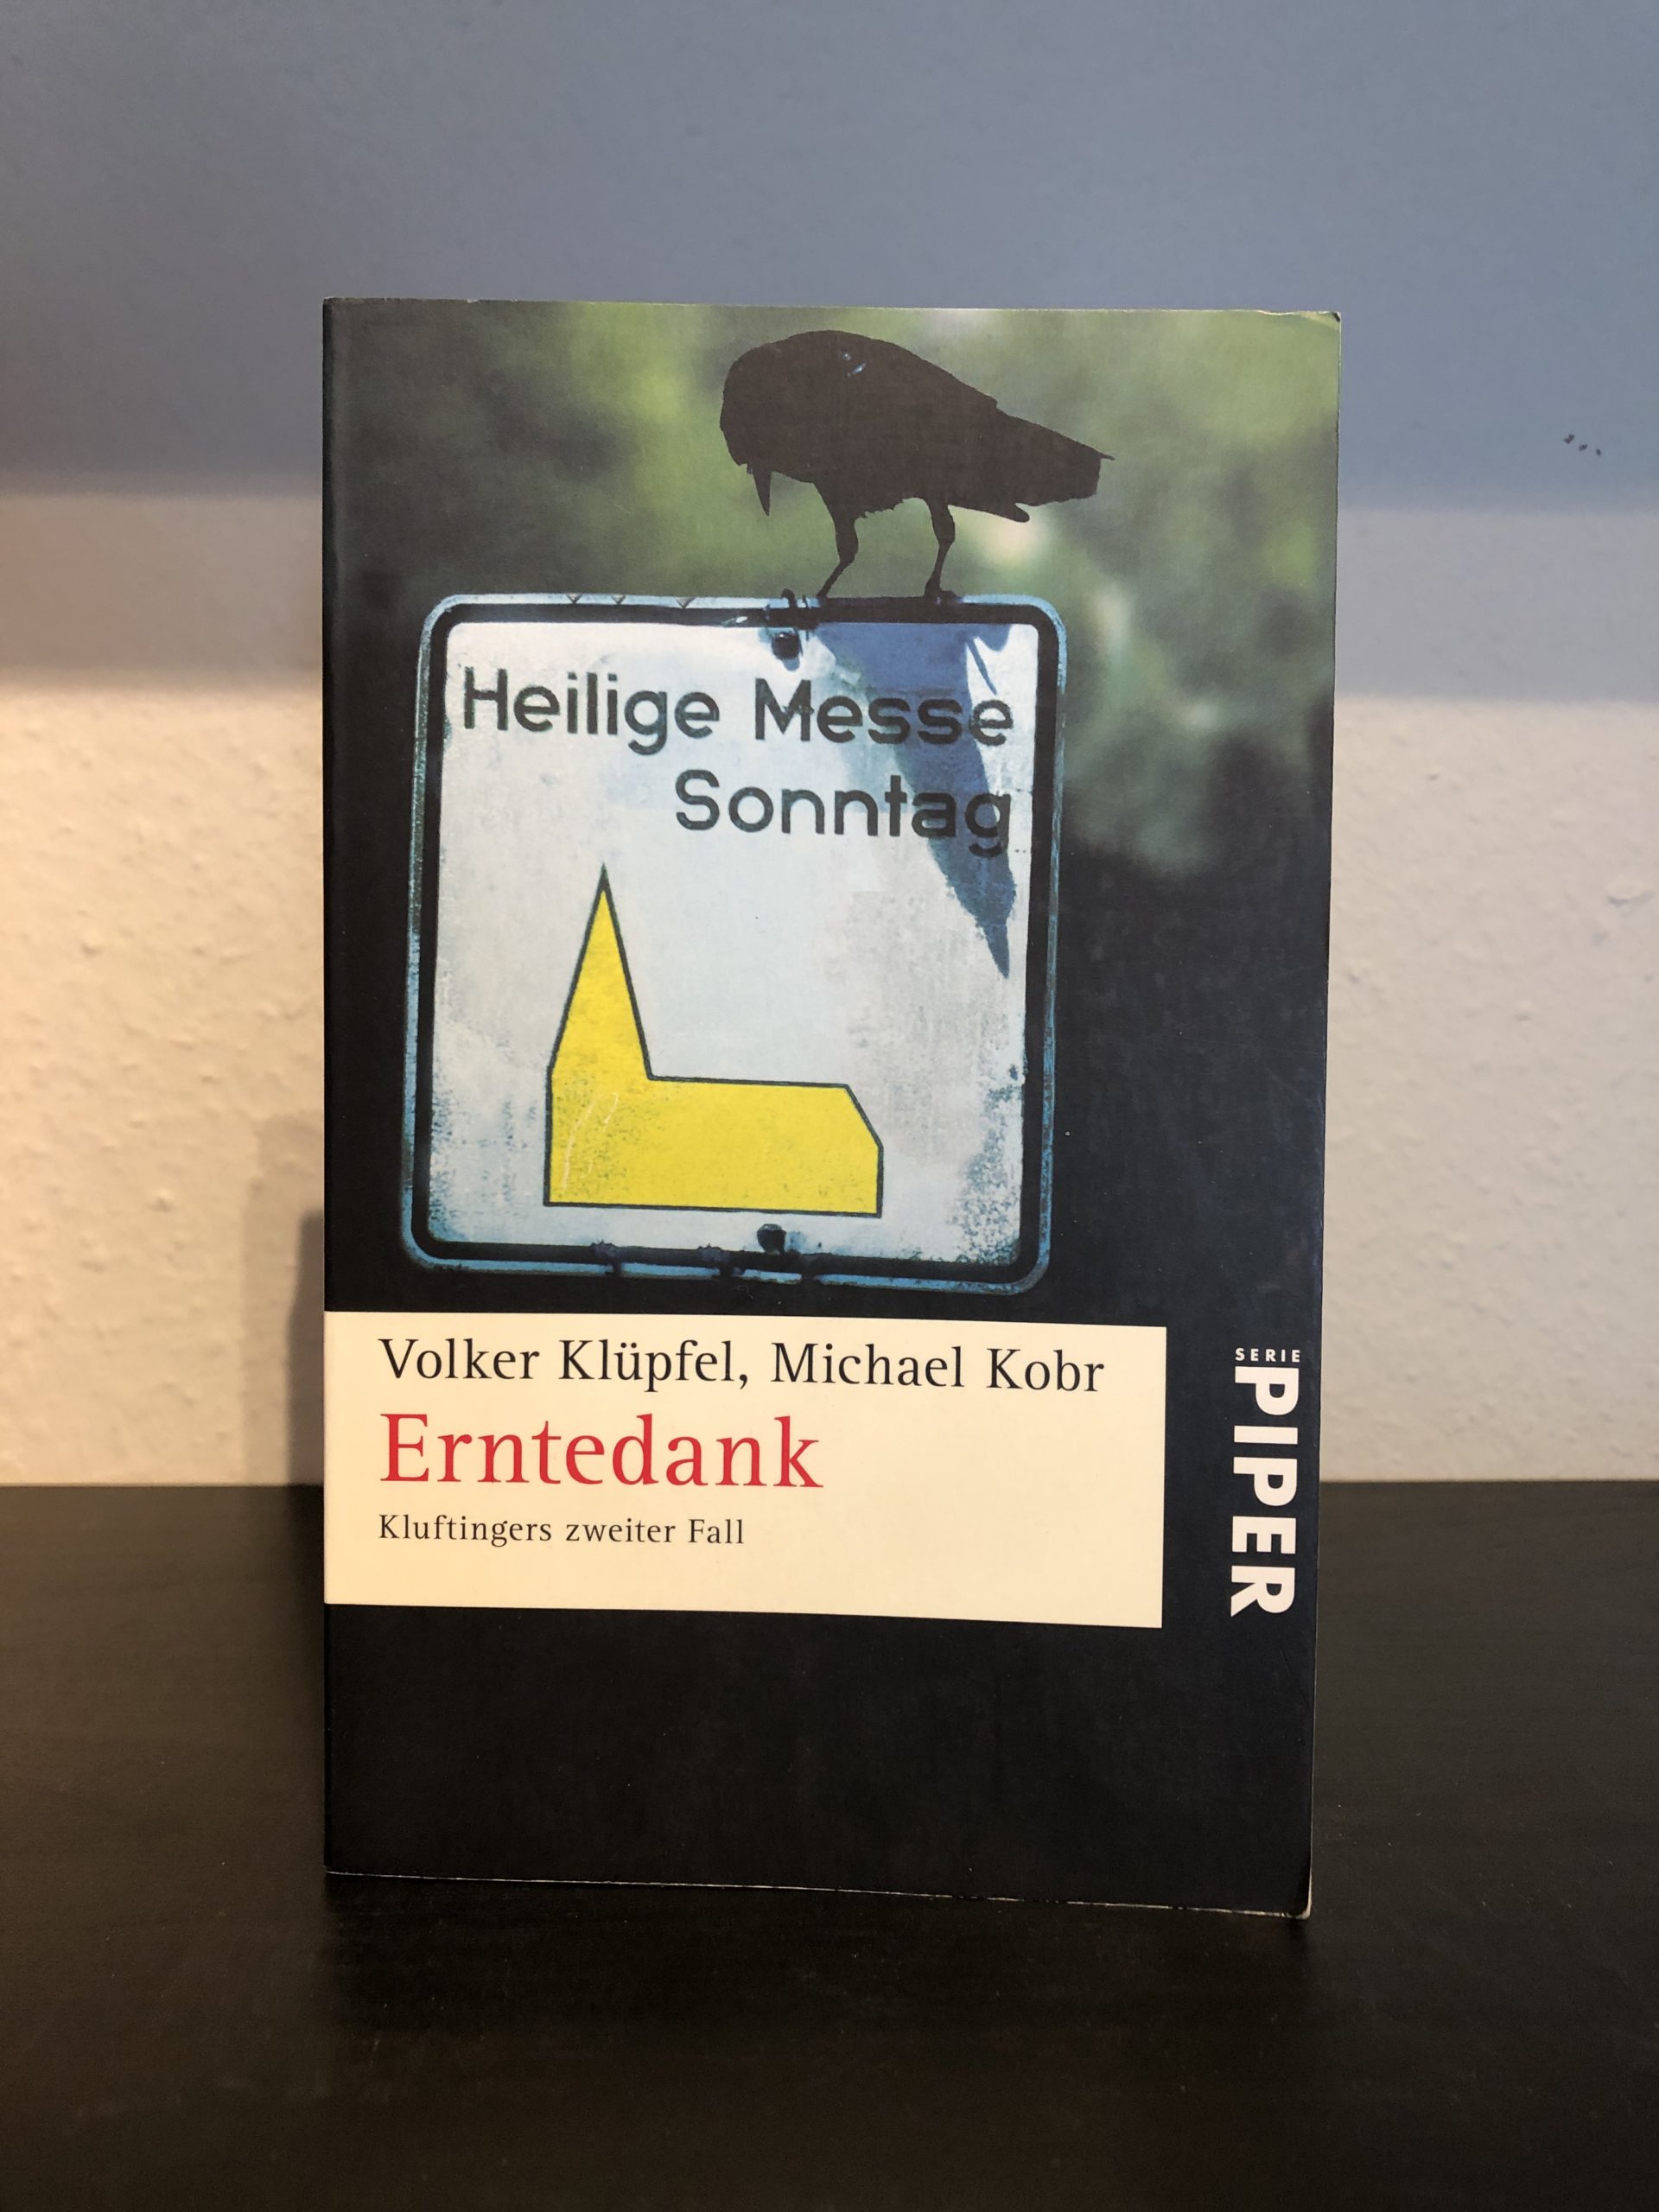 Erntedank - Kluftingers zweiter Fall - Volker Klüpfel, Michael Kobr main image